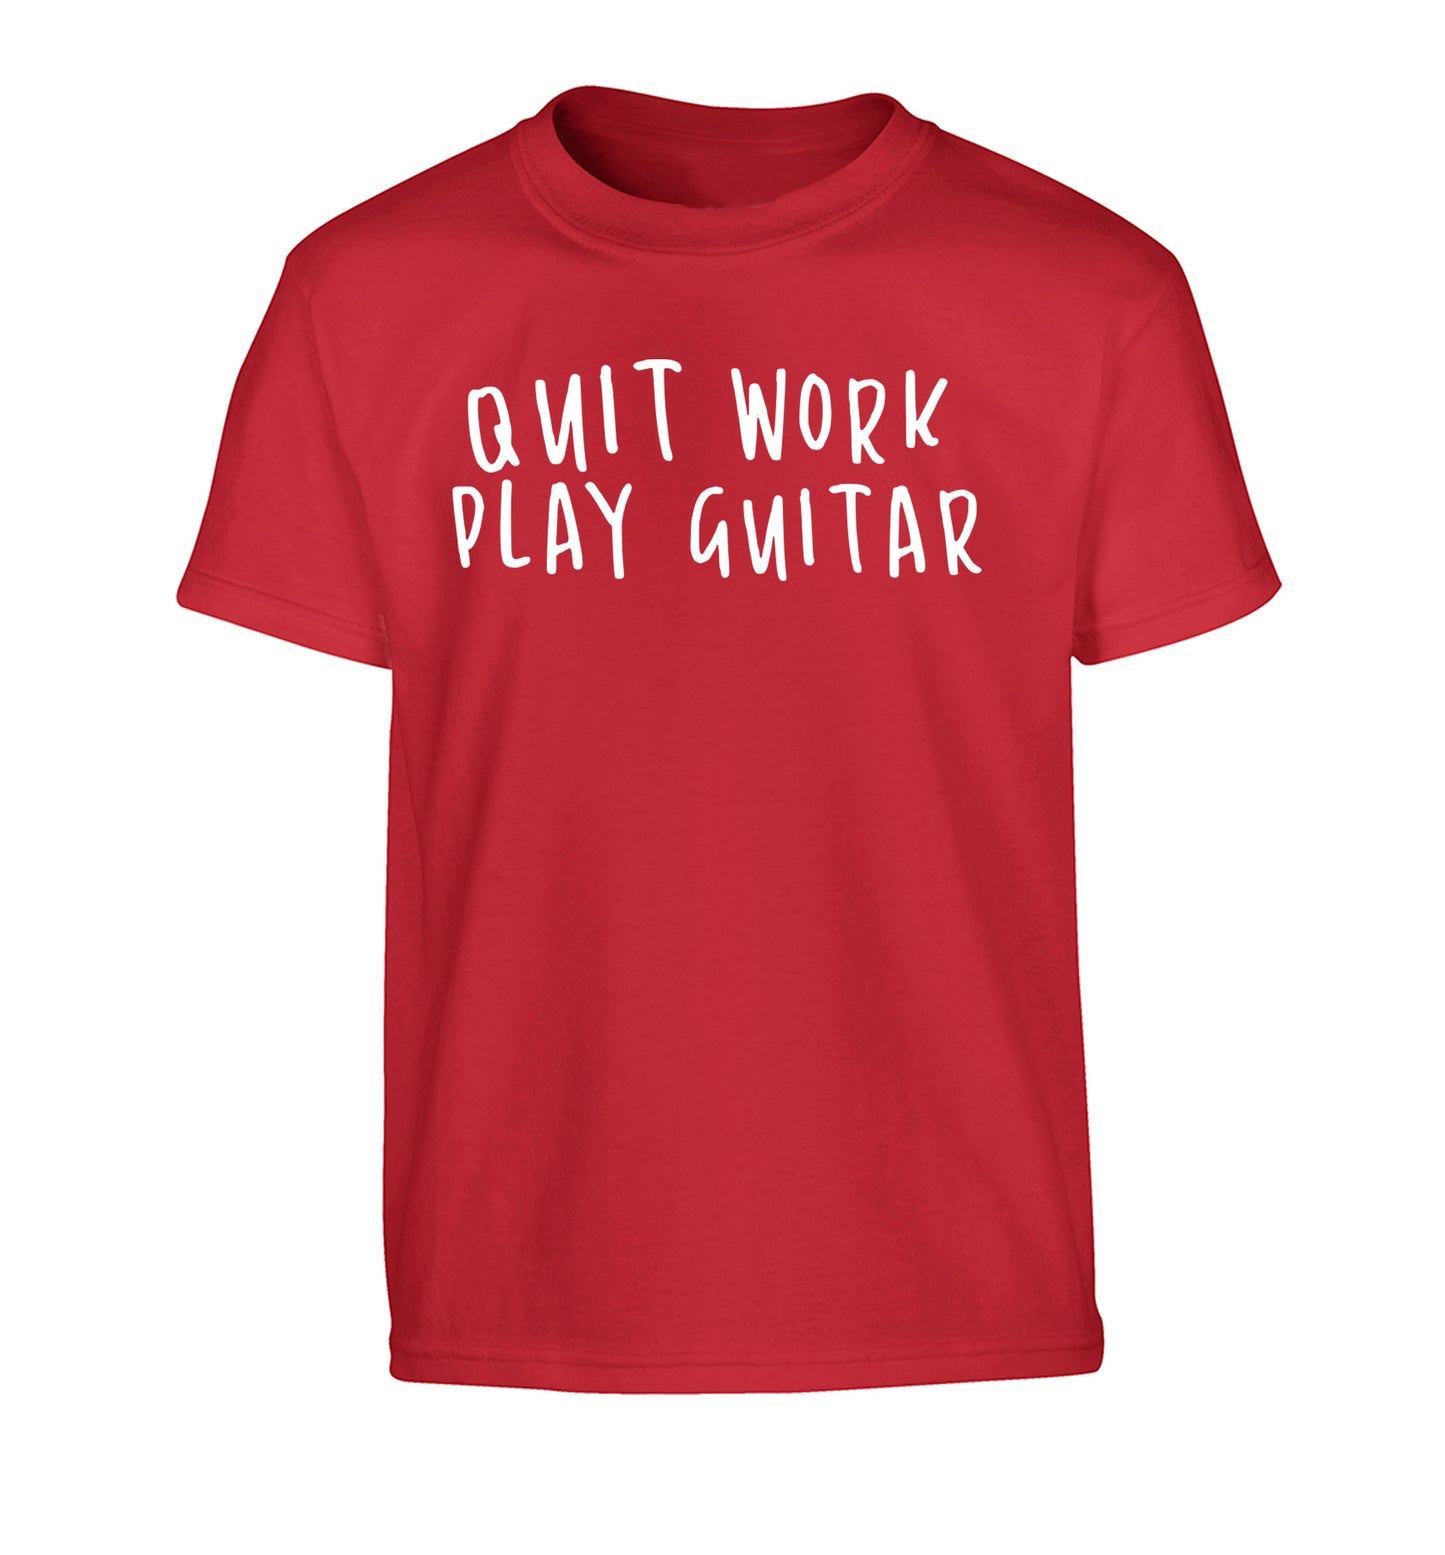 Quit work play guitar Children's red Tshirt 12-14 Years